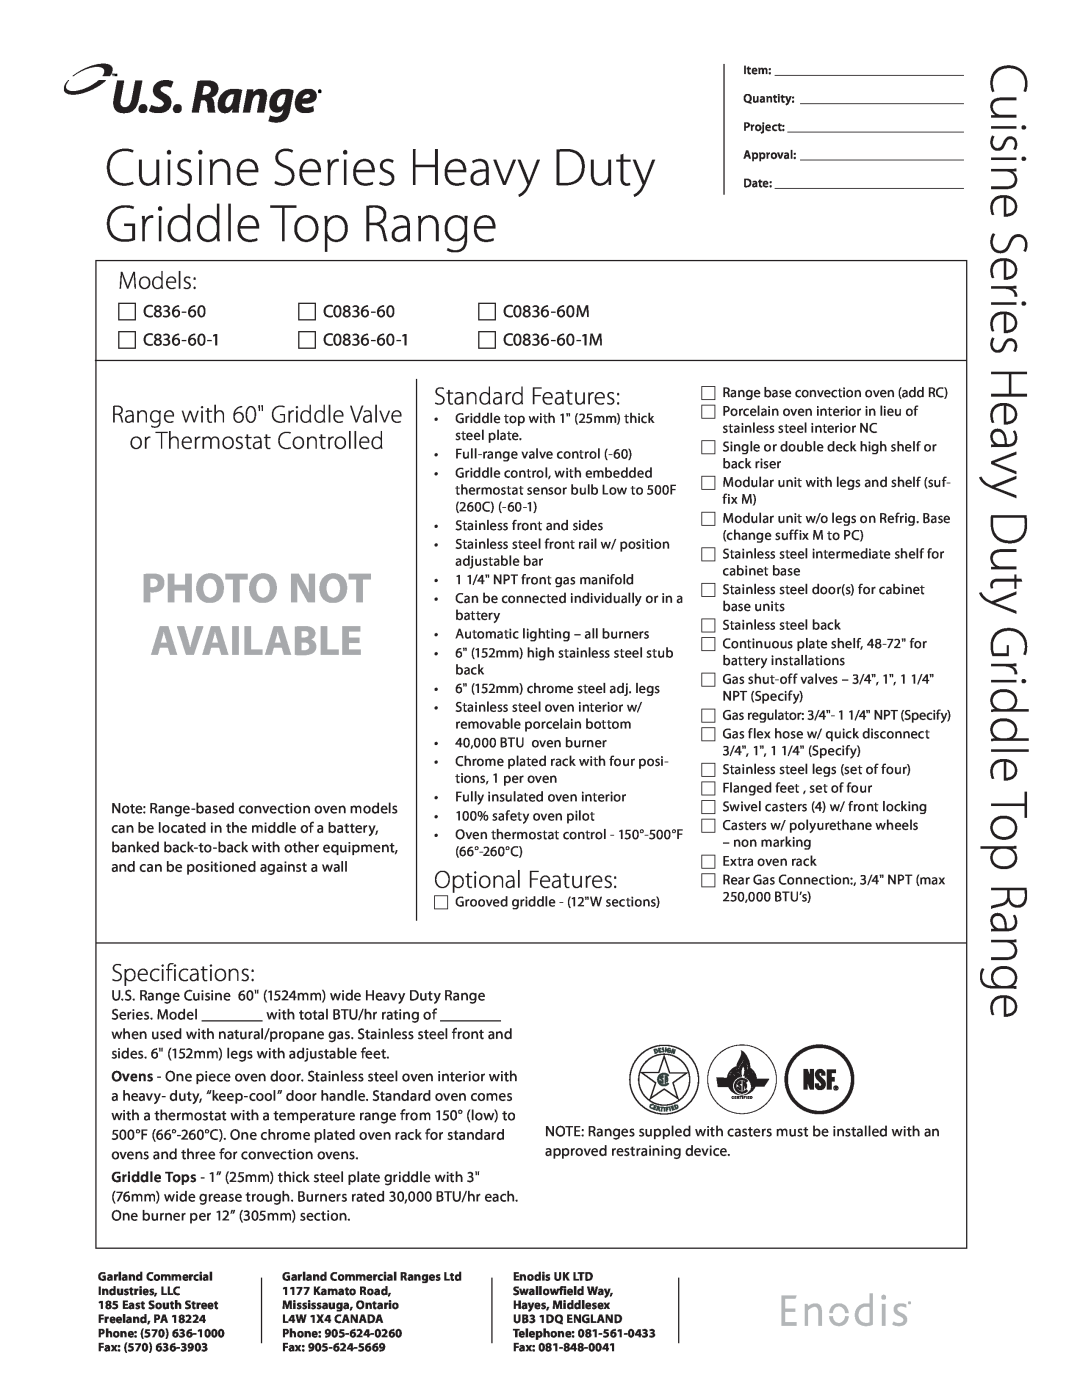 Garland specifications Cuisine,  C0836-60M,  C836-60-1,  C0836-60-1, Heavy Duty Griddle Top Range, Series 